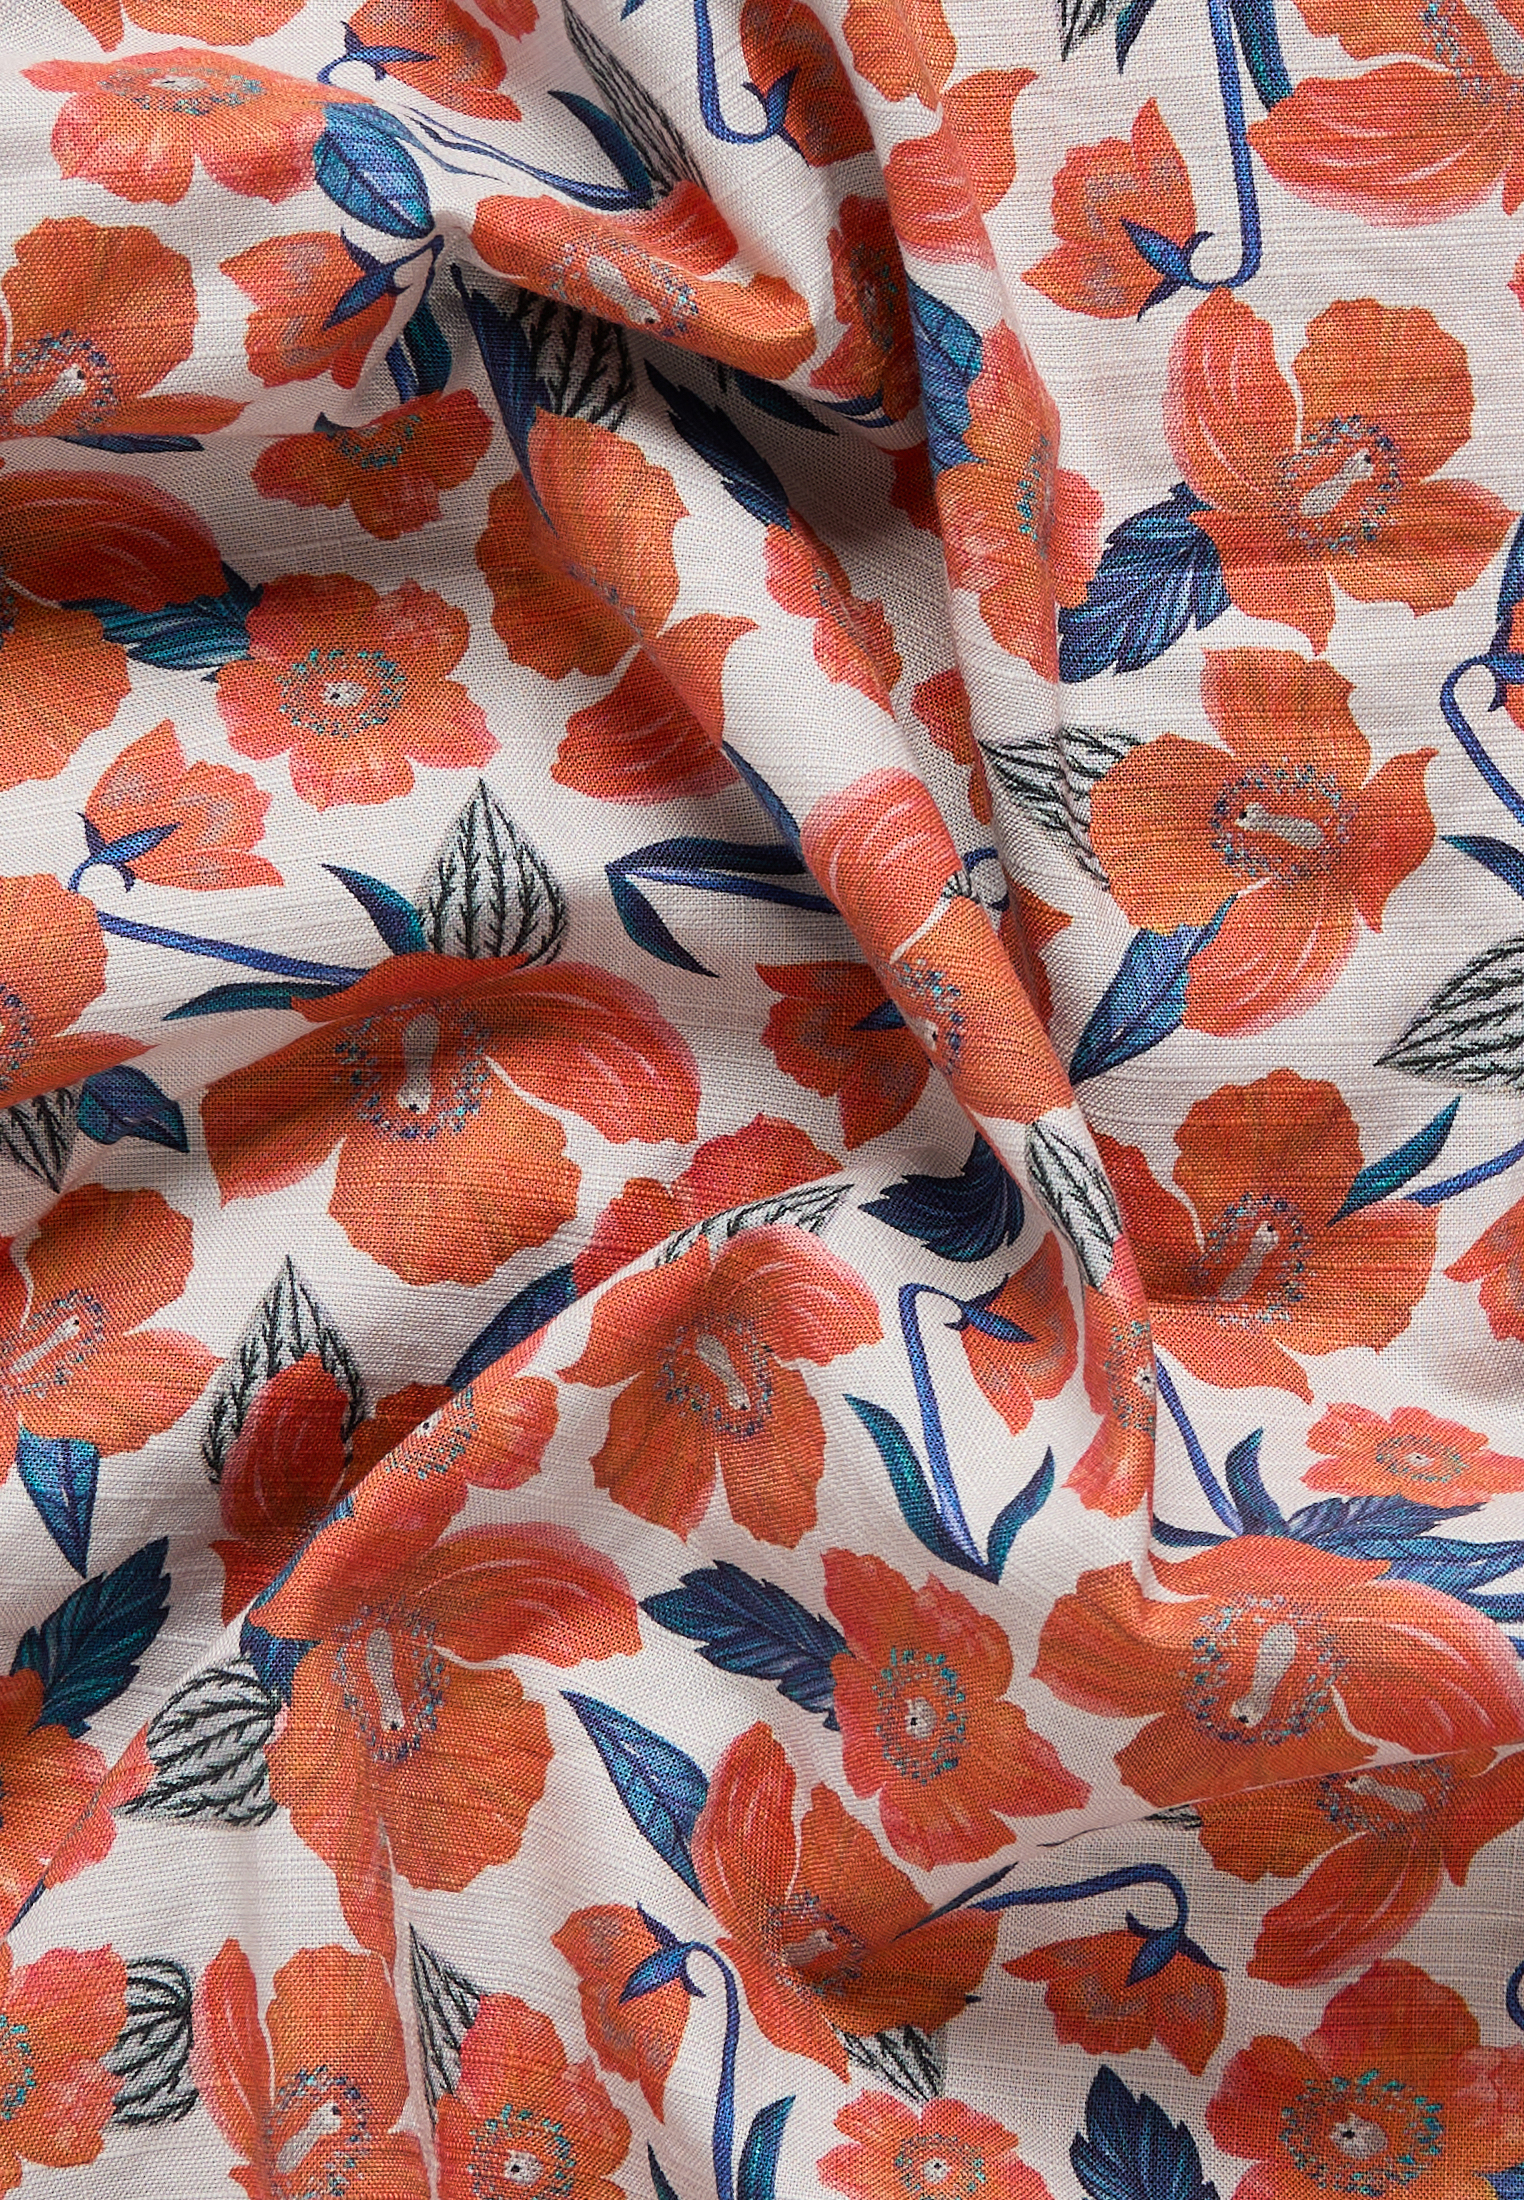 REGULAR FIT Shirt in orange printed | orange | S | short sleeve |  1SH04089-08-01-S-1/2